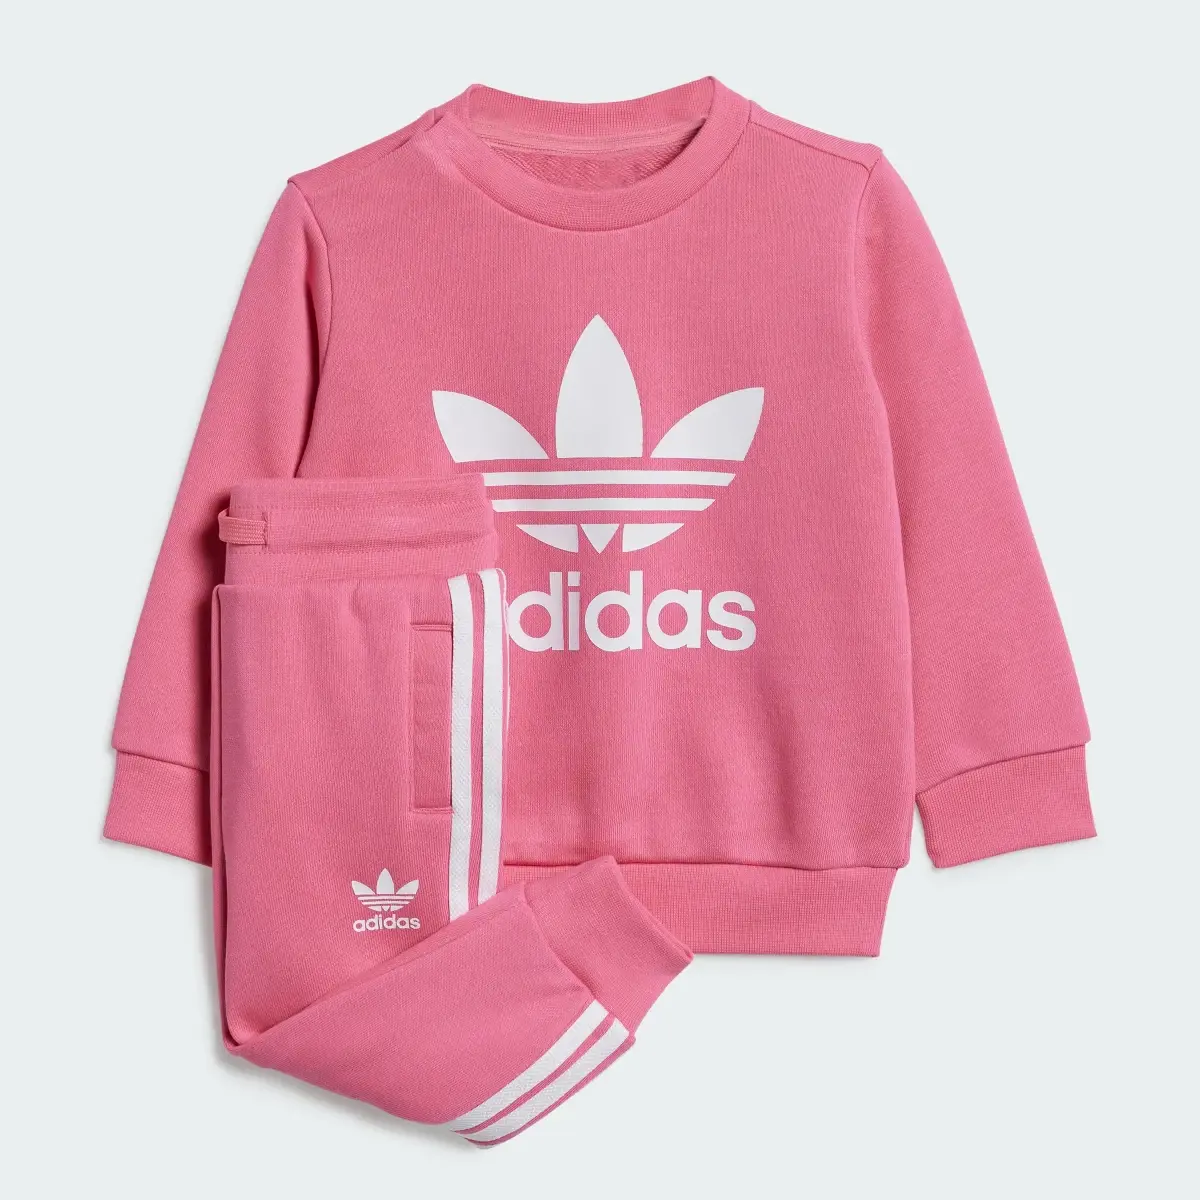 Adidas Crew Sweatshirt Set. 1